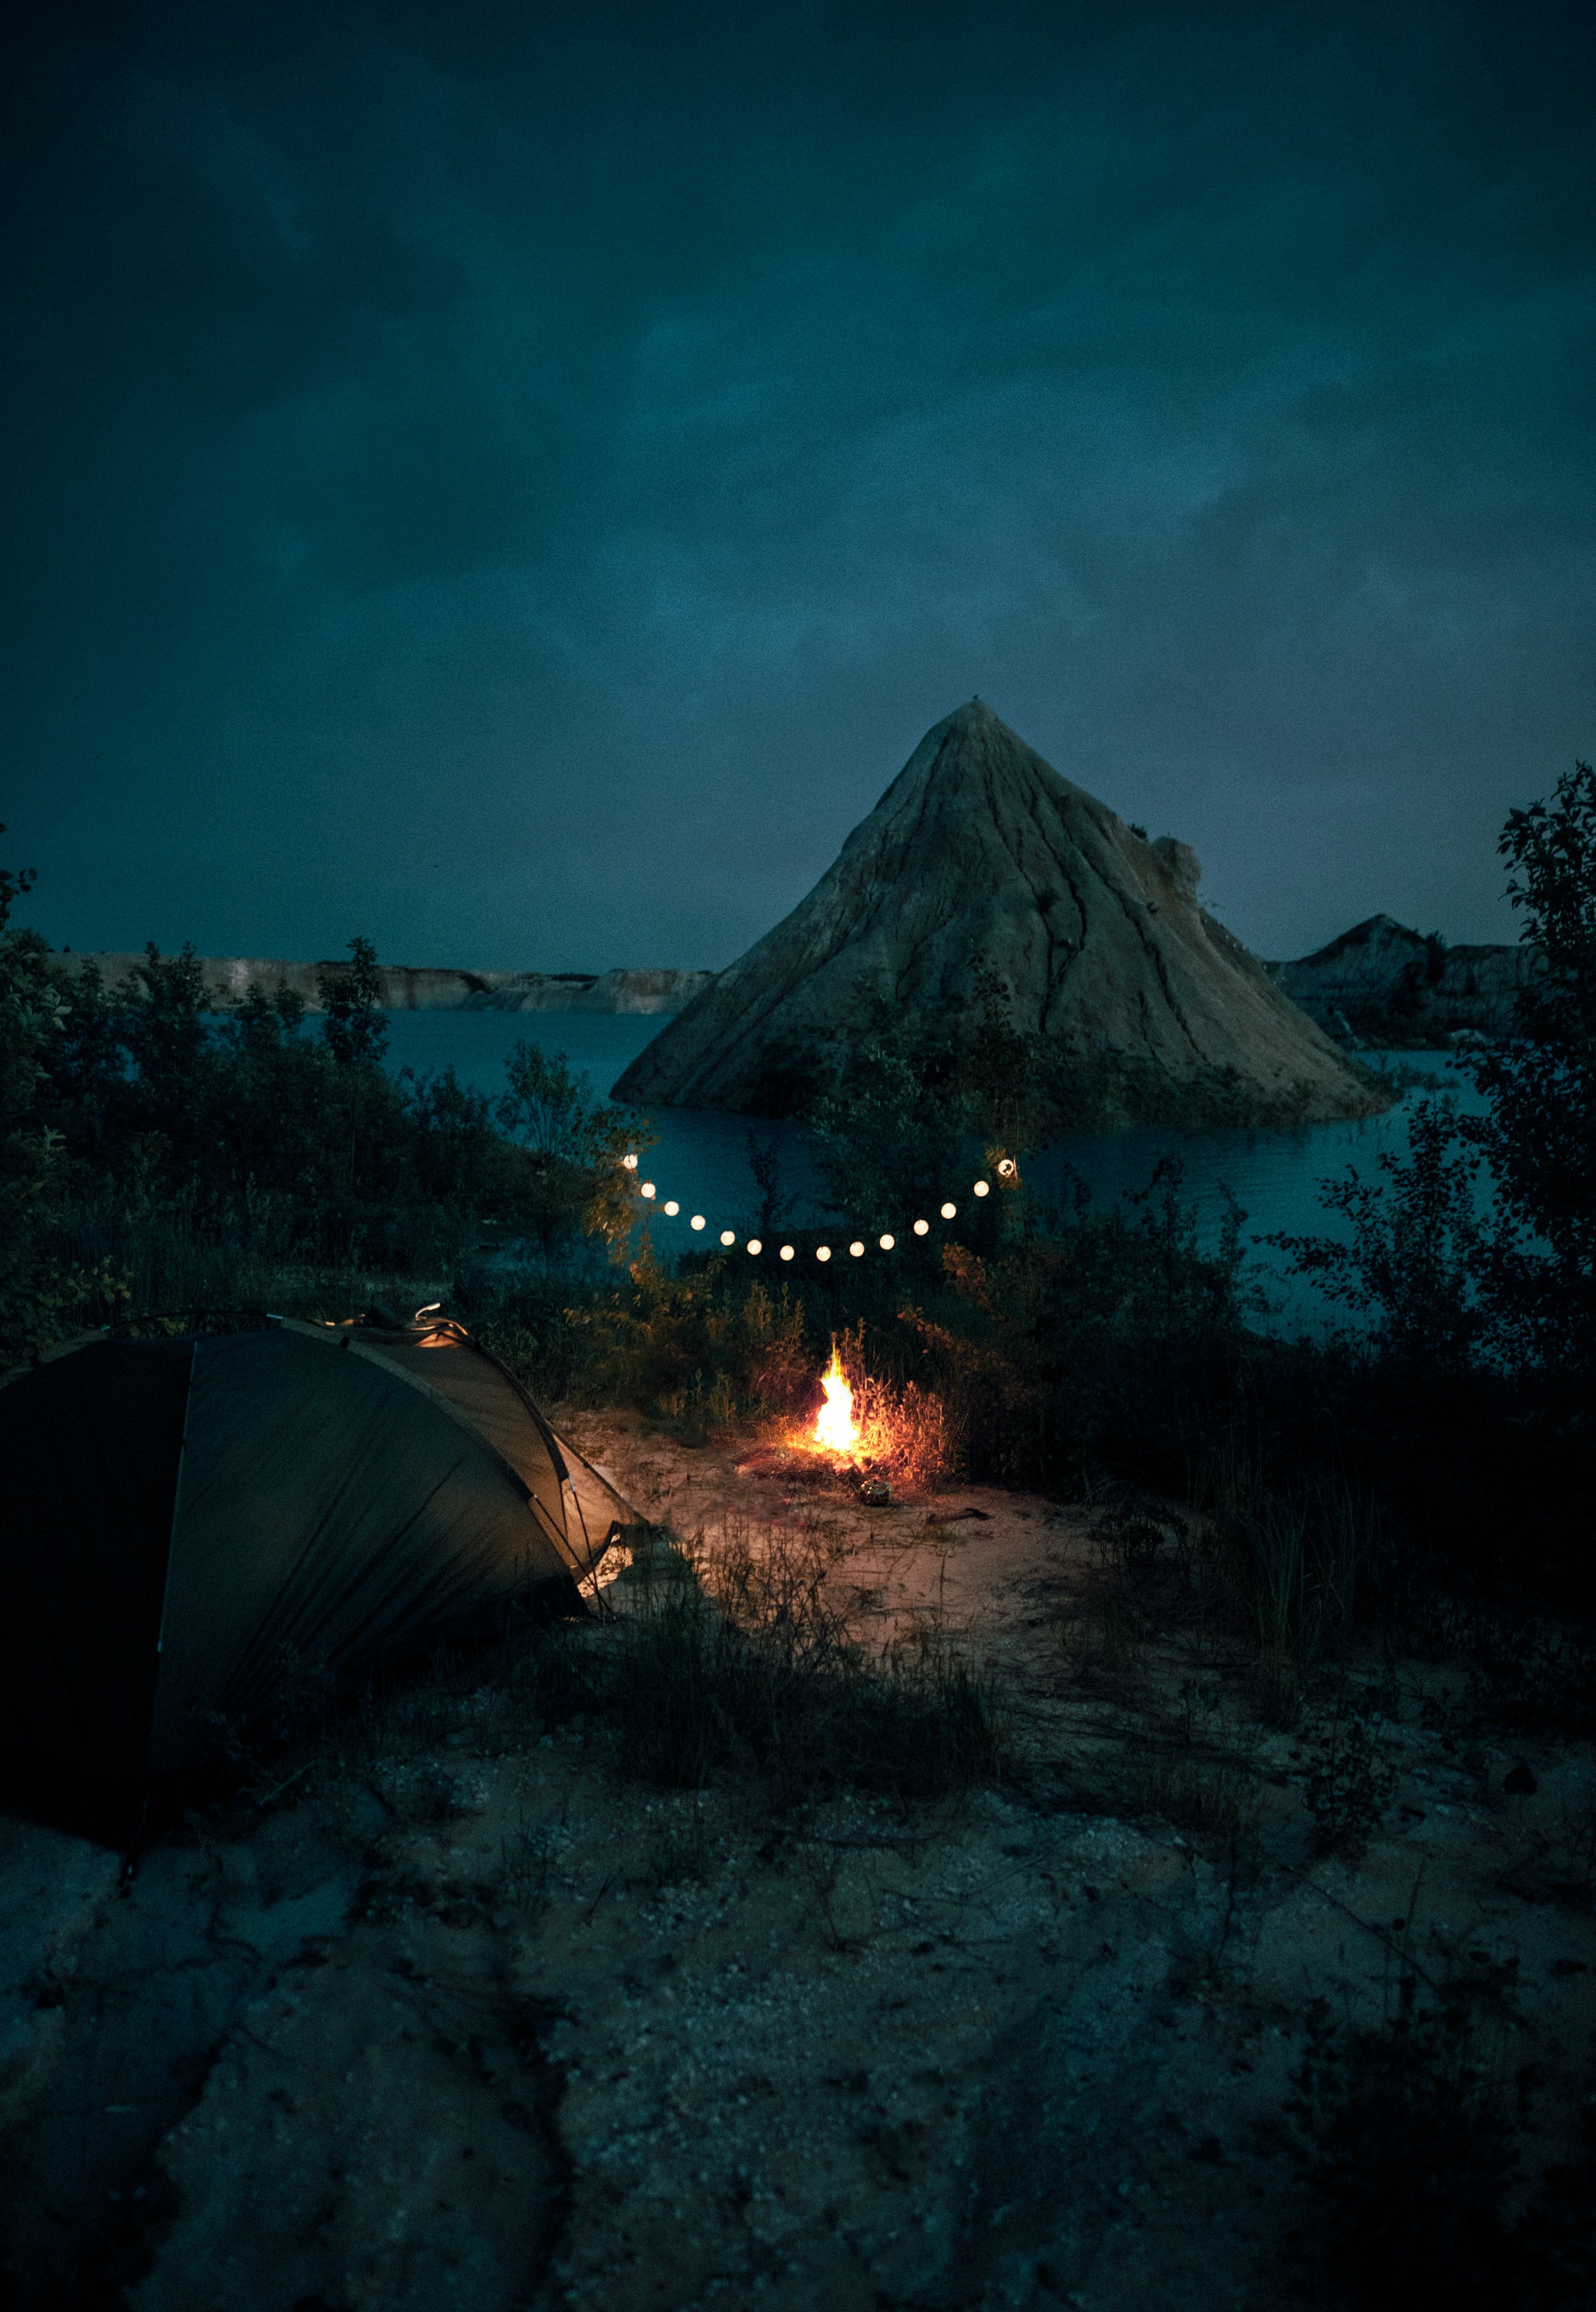 camping, campsite, bonfire, nature, rocks, garland, tent